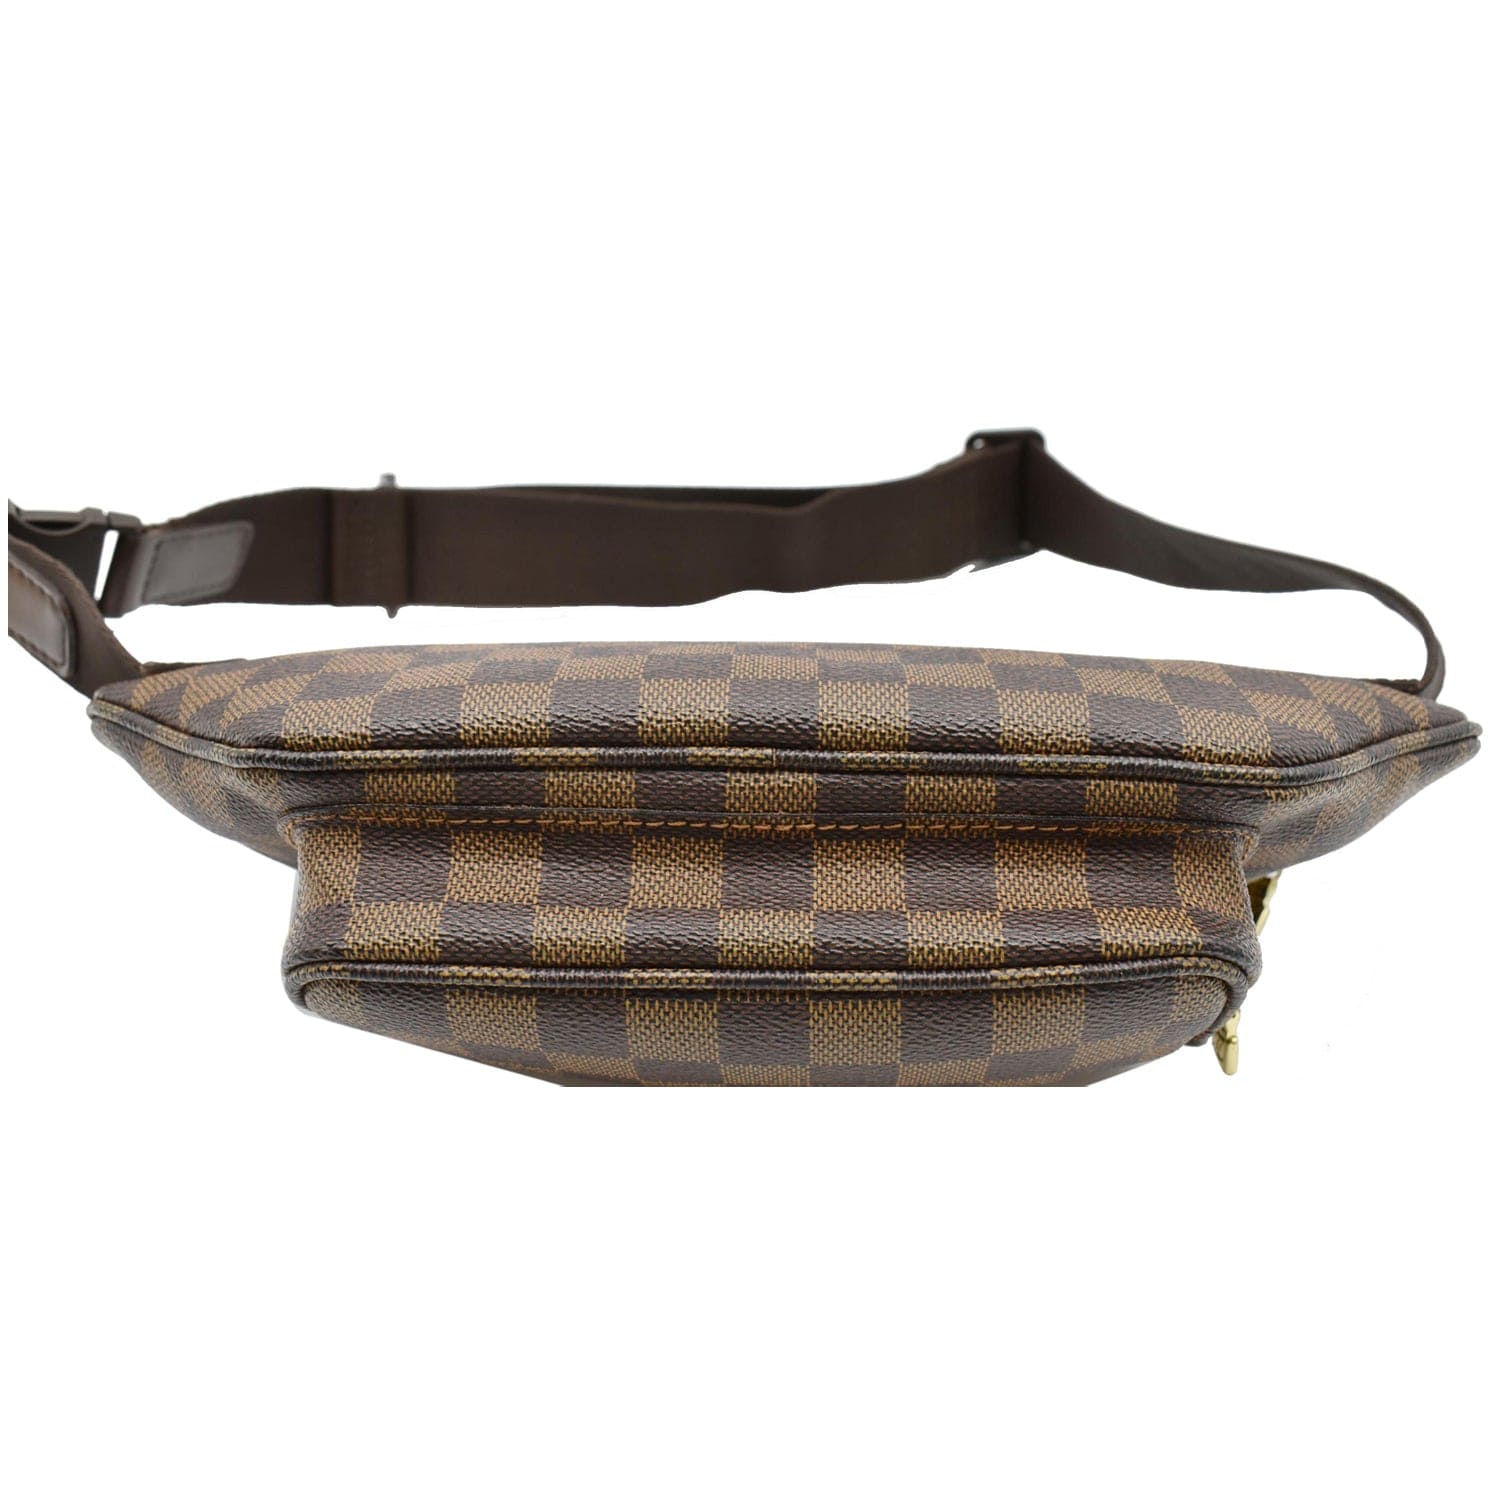 Louis-Vuitton-Damier-Bam-Bag-Melville-Waist-Bag-Body-Bag-N51172